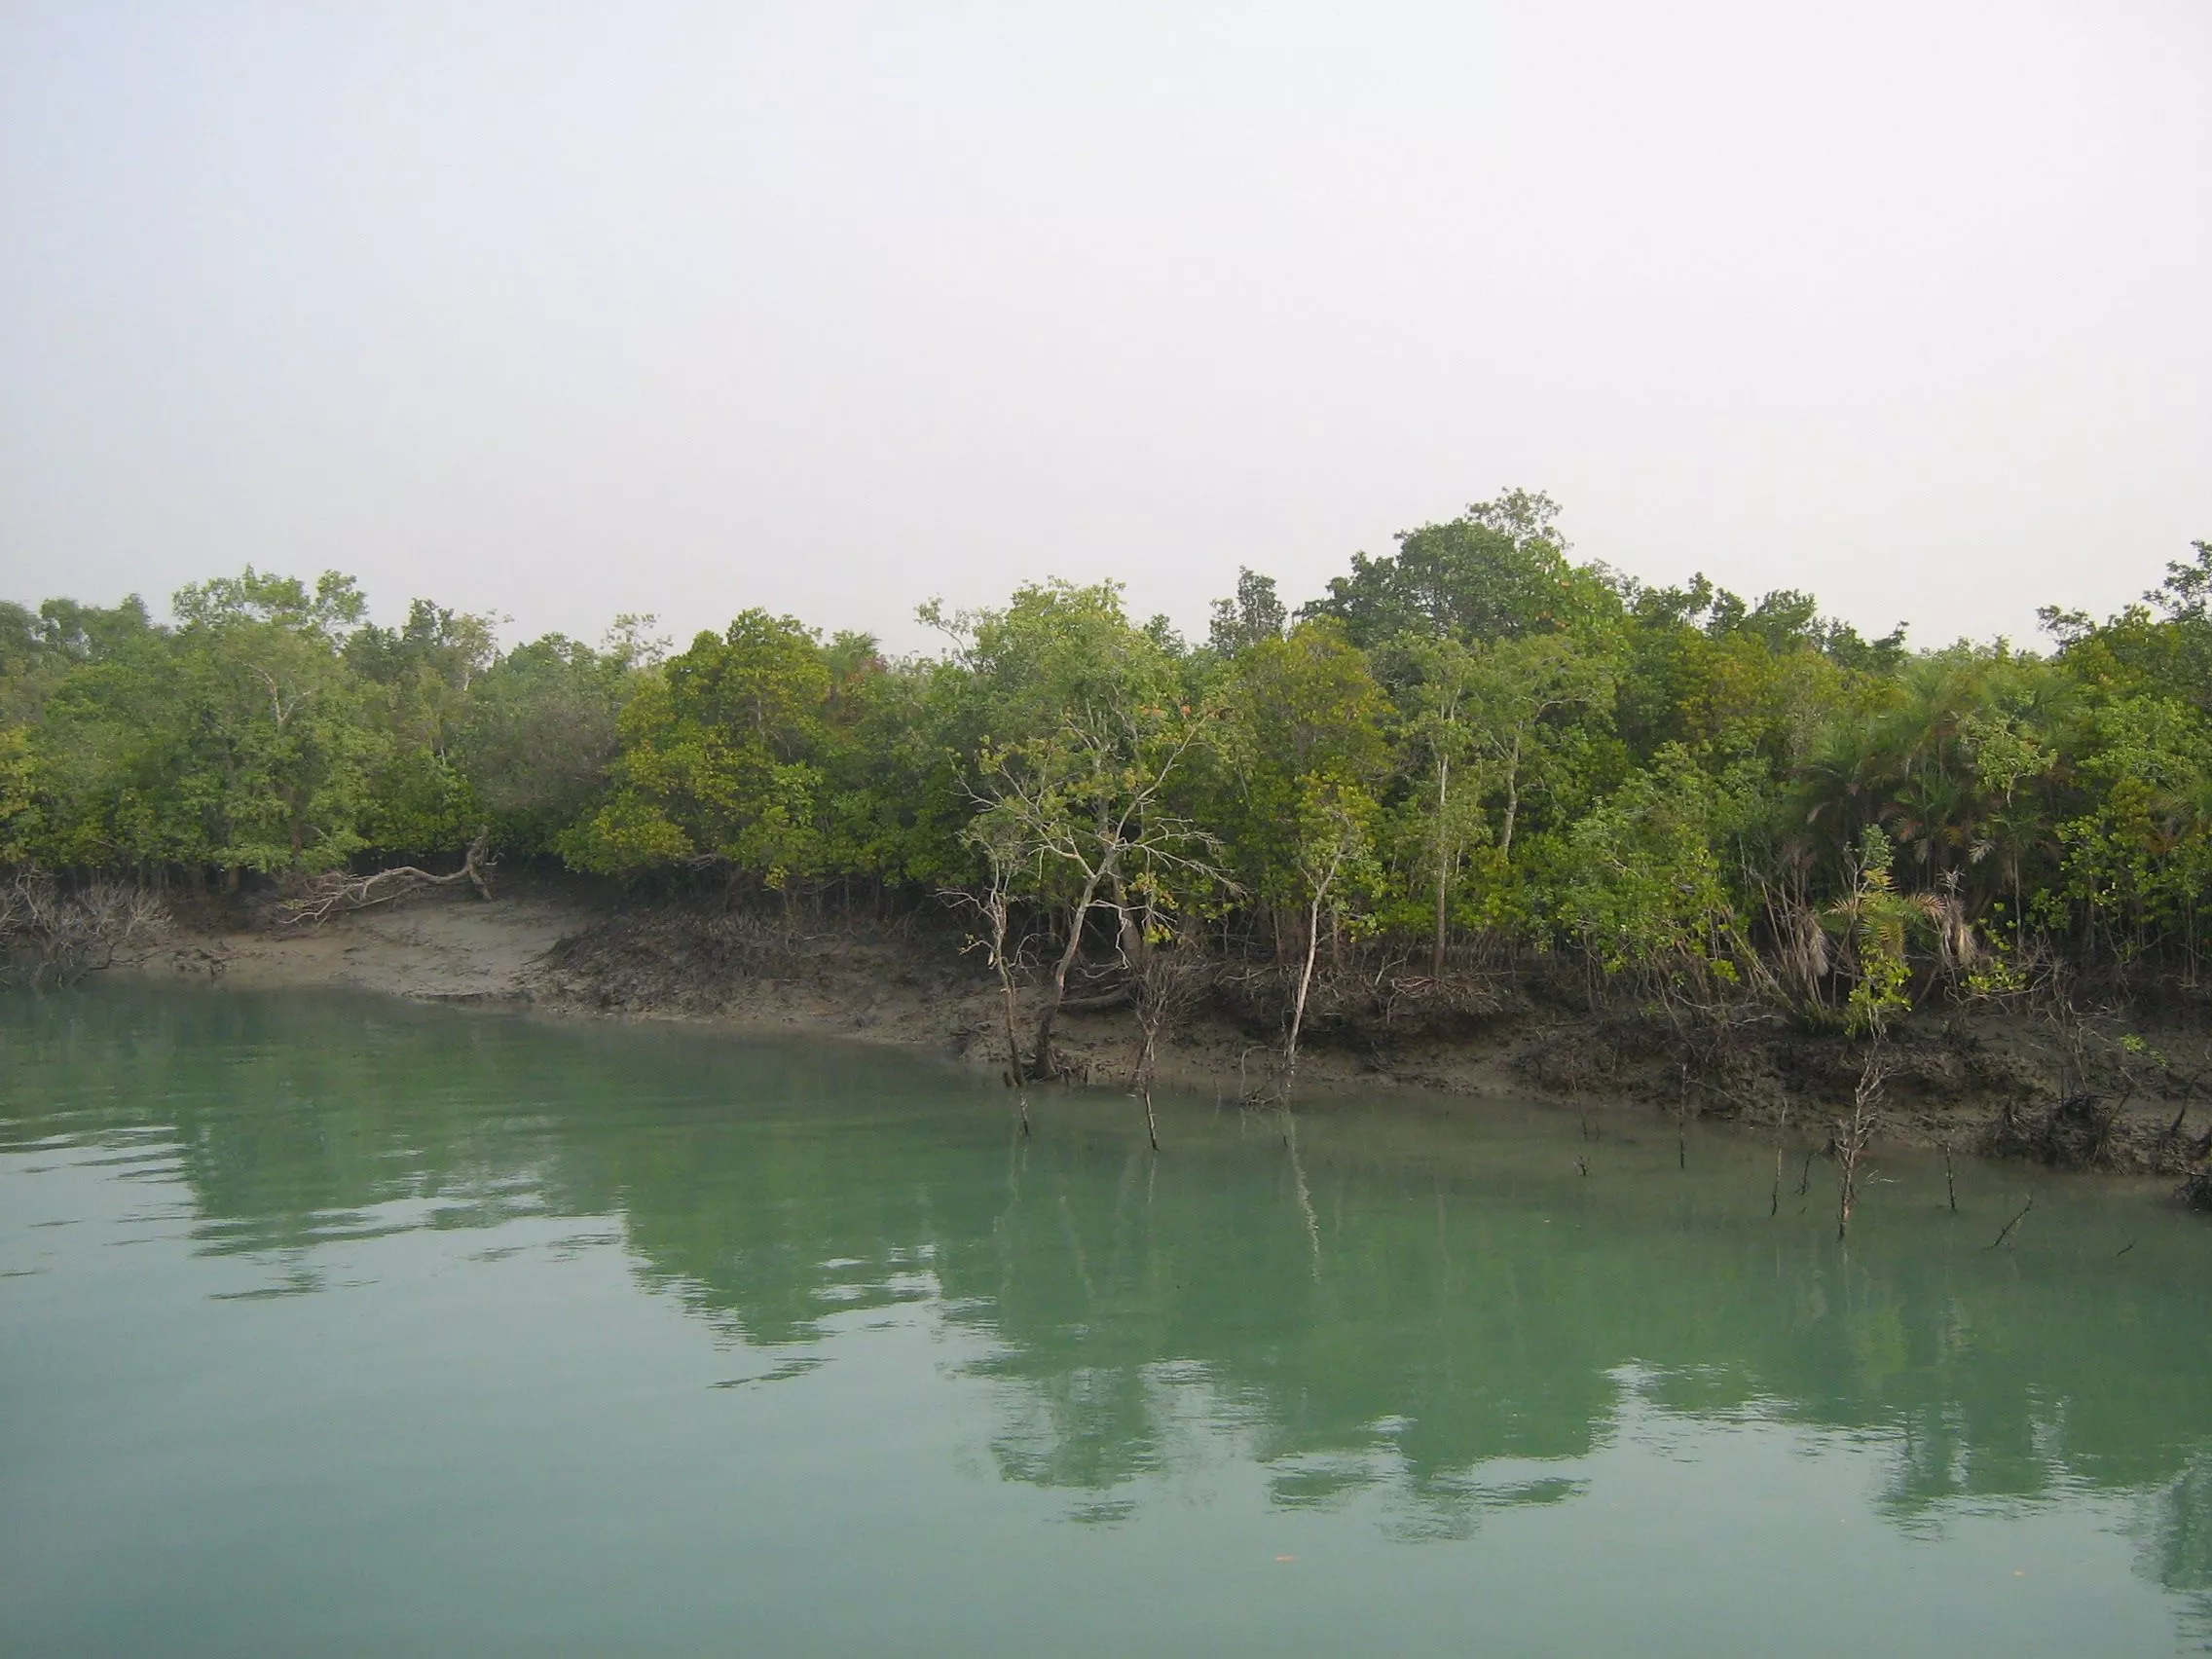 Trip to Sundarban from Chennai